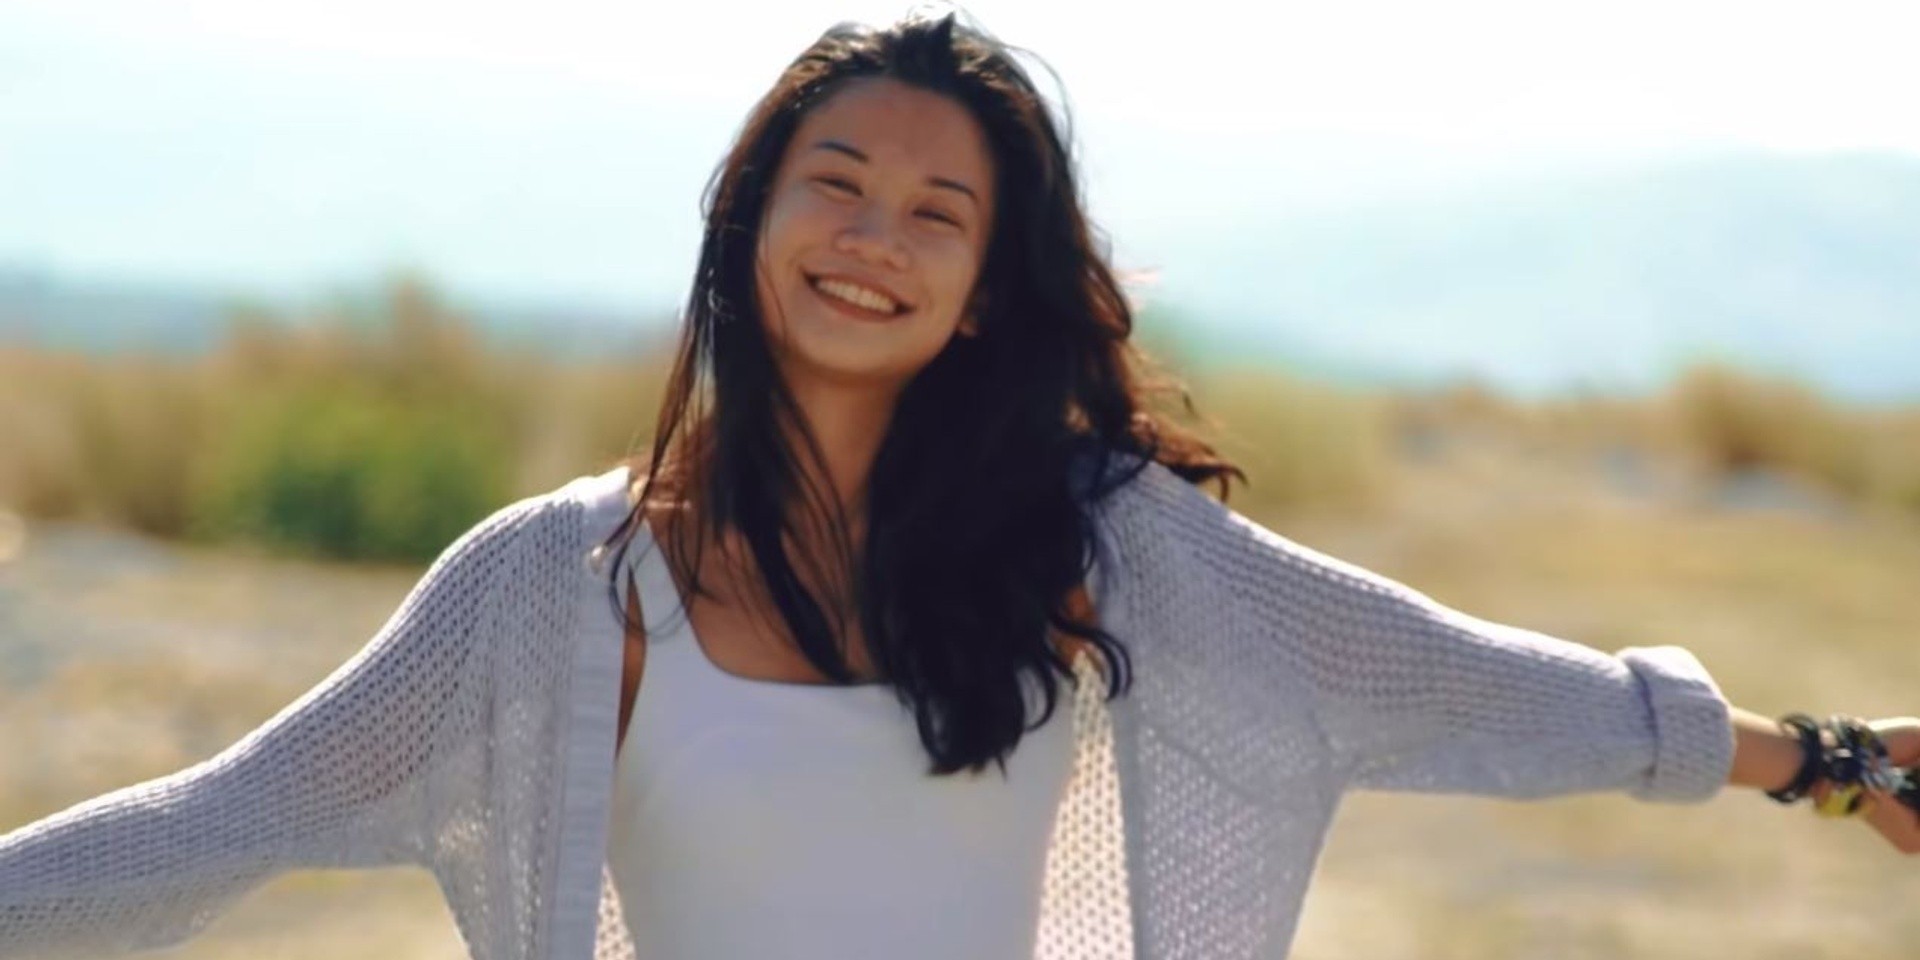 Hulyo unveil heartbreaking 'Kahit Isang Saglit' video, starring Bea Lorenzo – watch